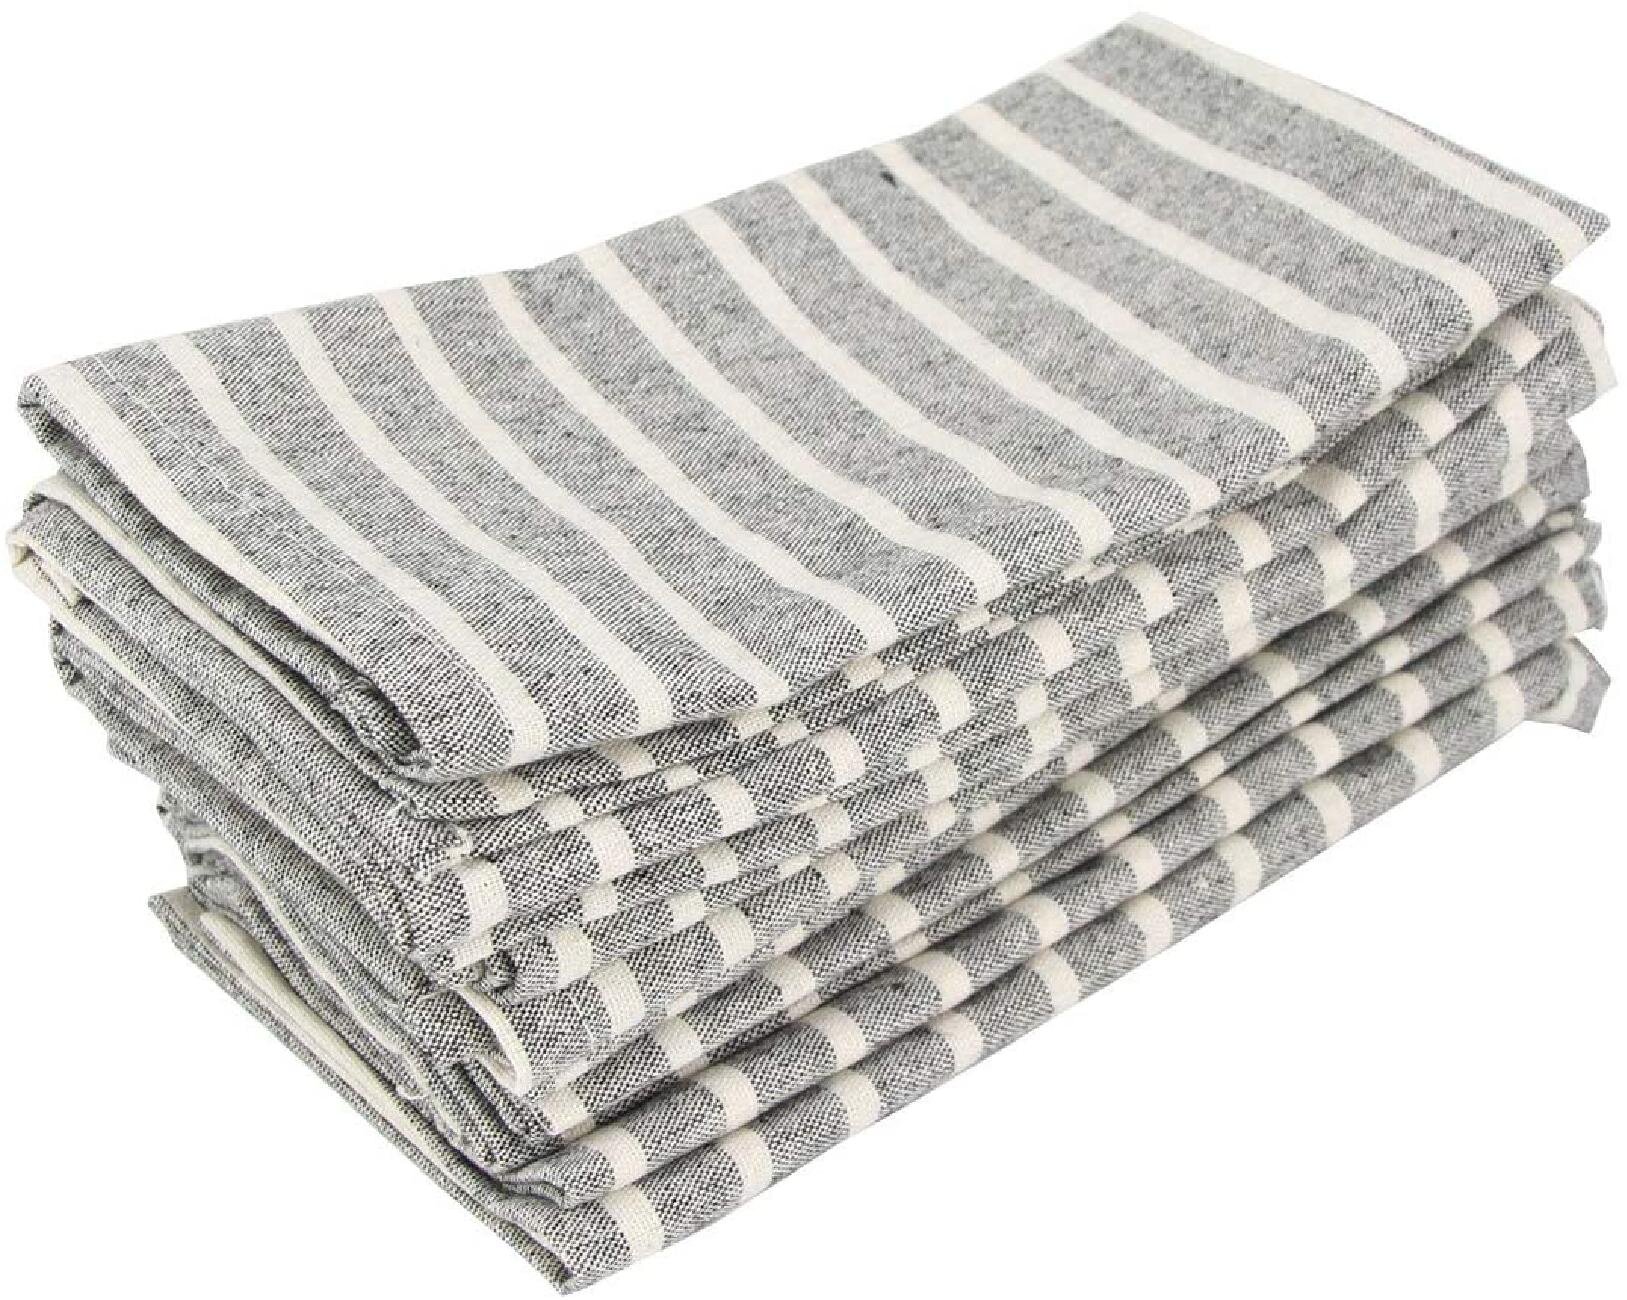 40 x 30 cm Set of 12 Soft Broad Striped Linen Cotton Dinner Cloth Napkins 